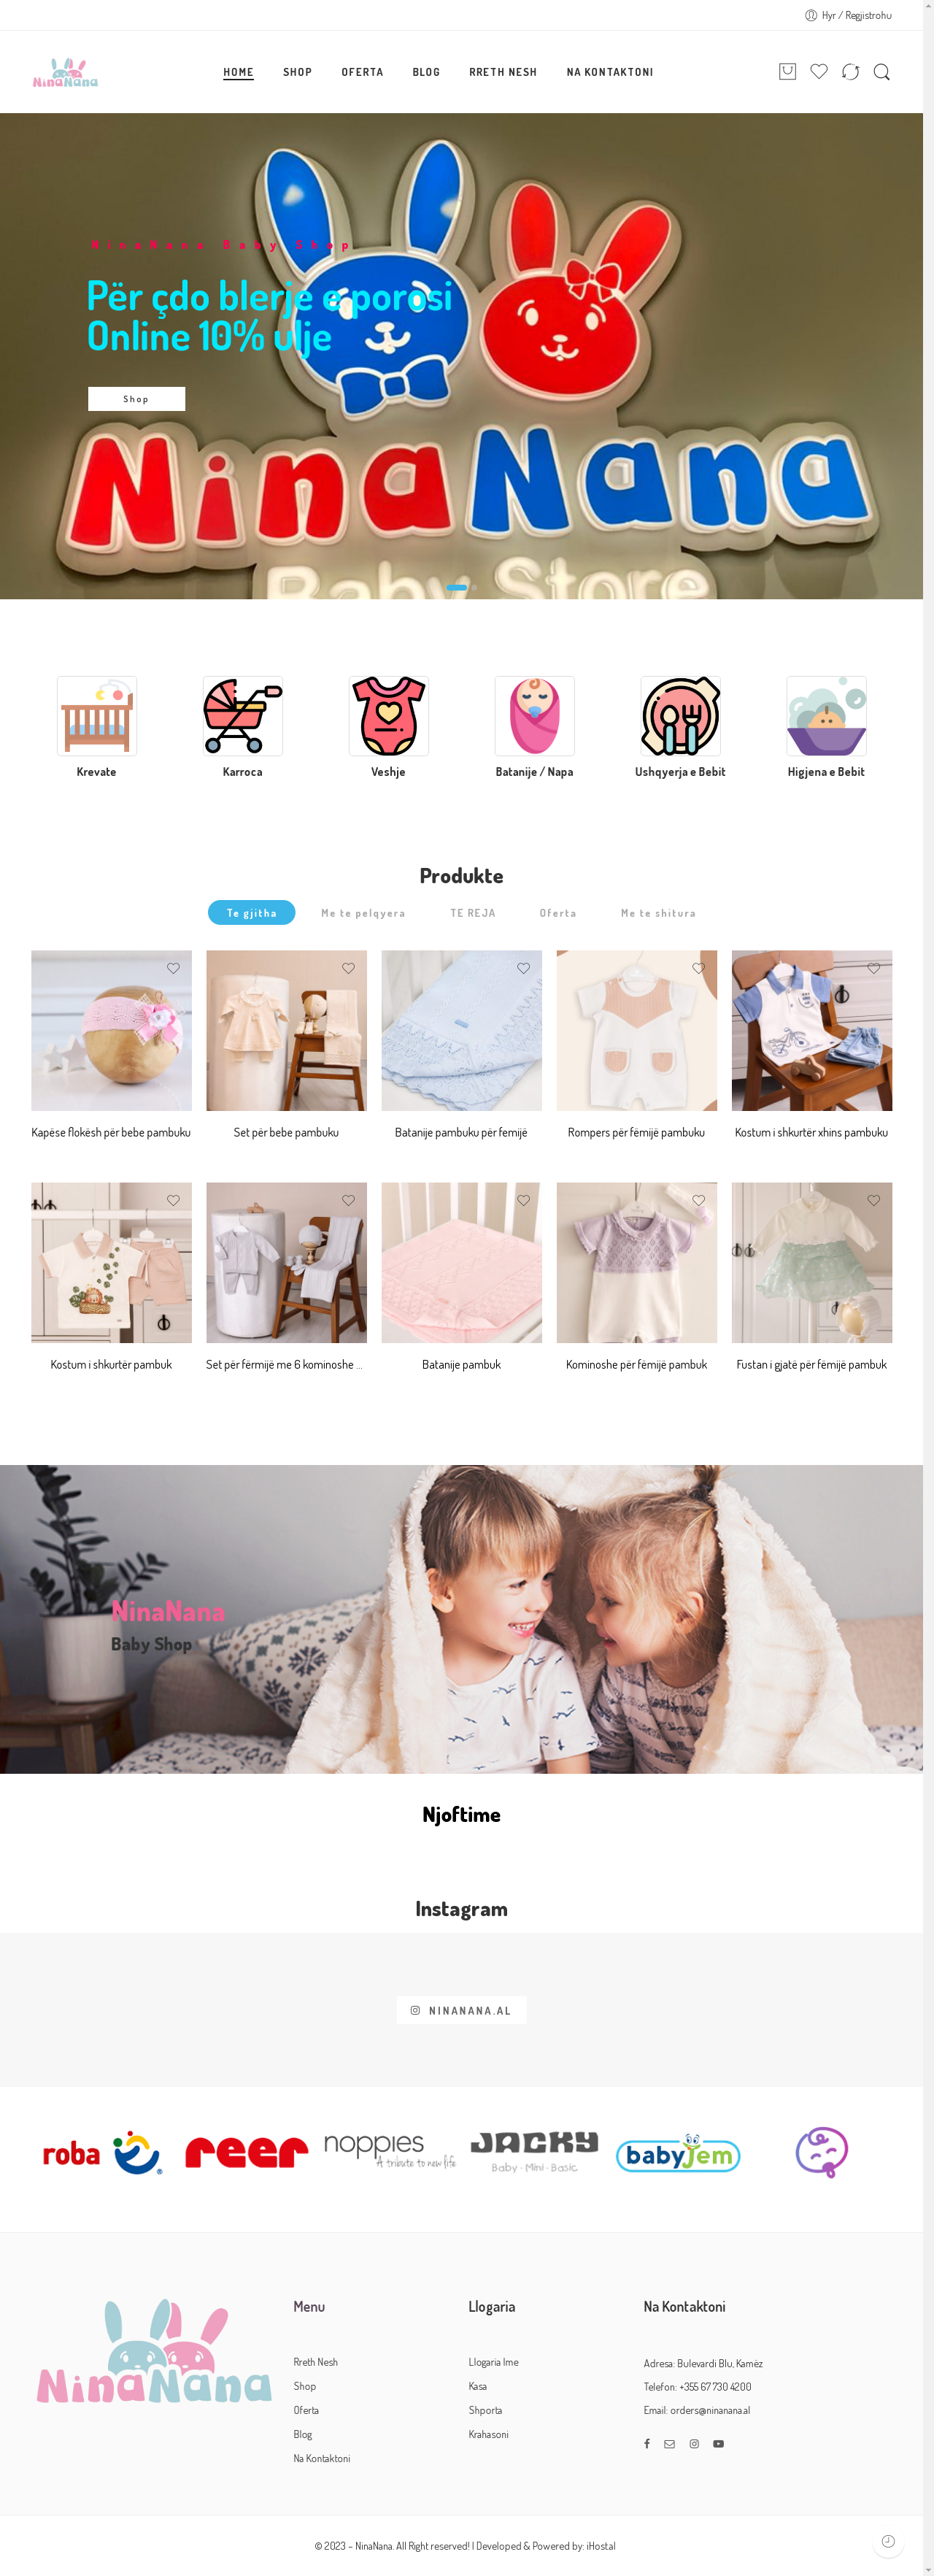 NinaNana Baby Shop - iHost.al - .AL Domain Registration, Web Hosting & Web Development